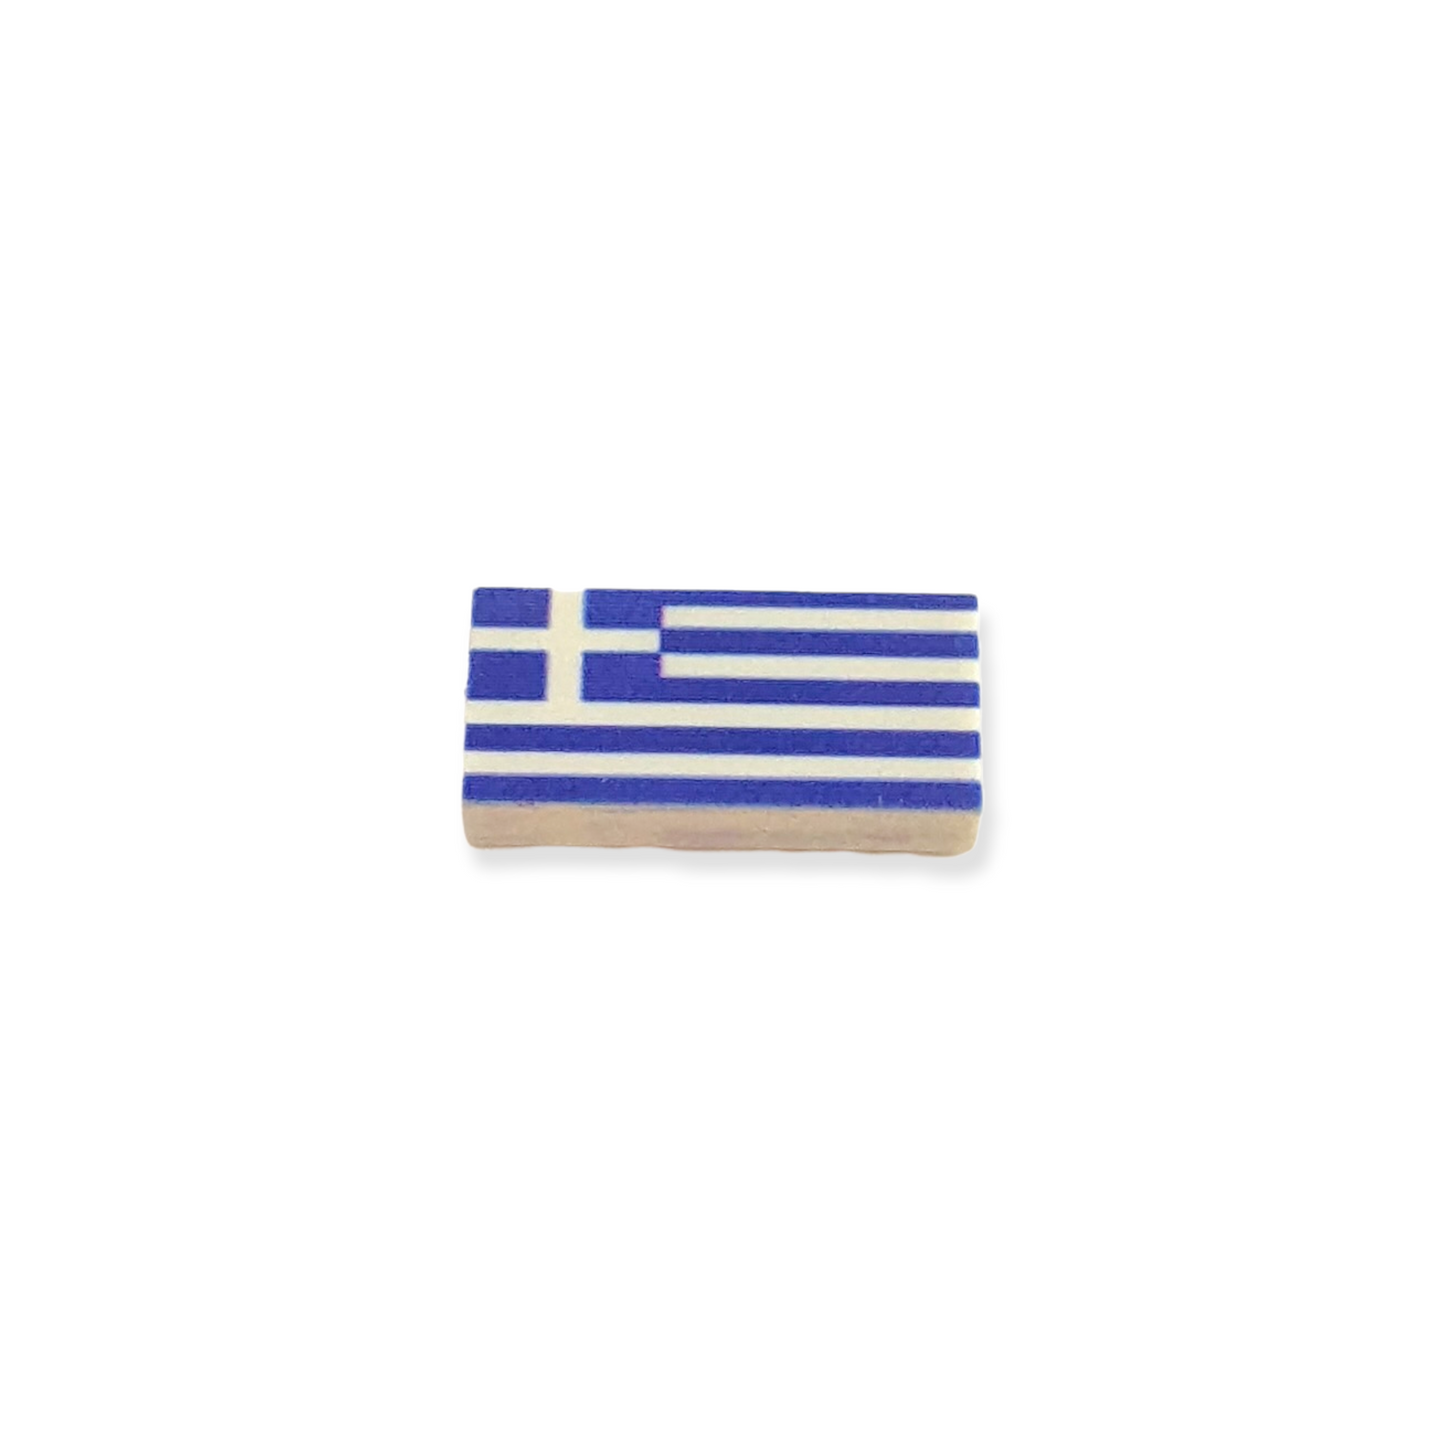 Bedruckte Fliese 1x2 - Griechische Flagge